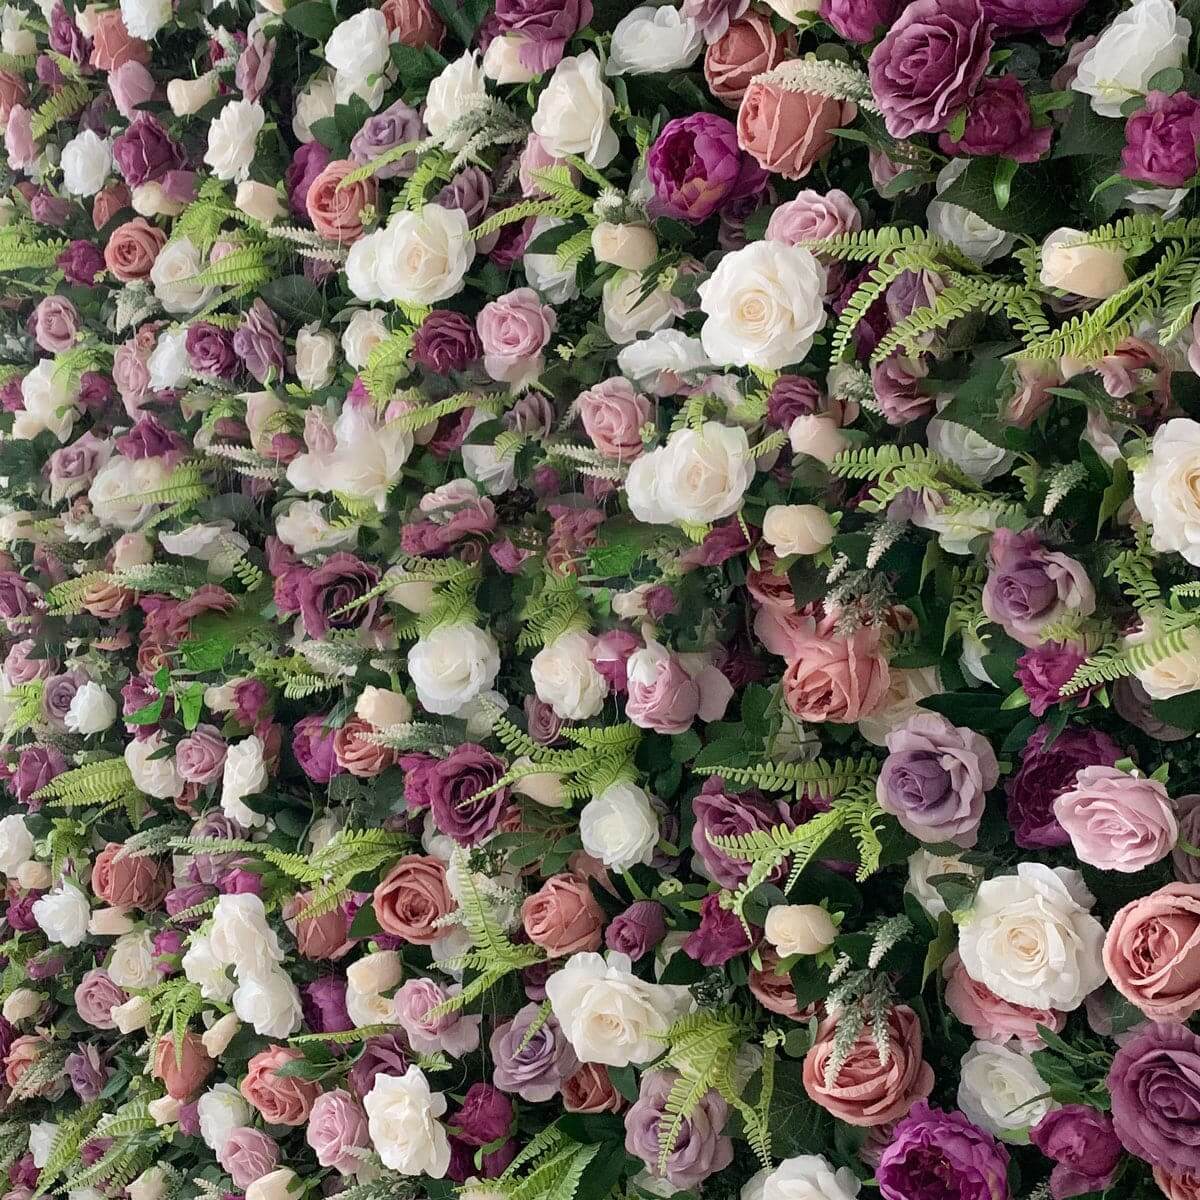 Wedding Decorative Backdrop Panels Artificial Peony Flower Wall